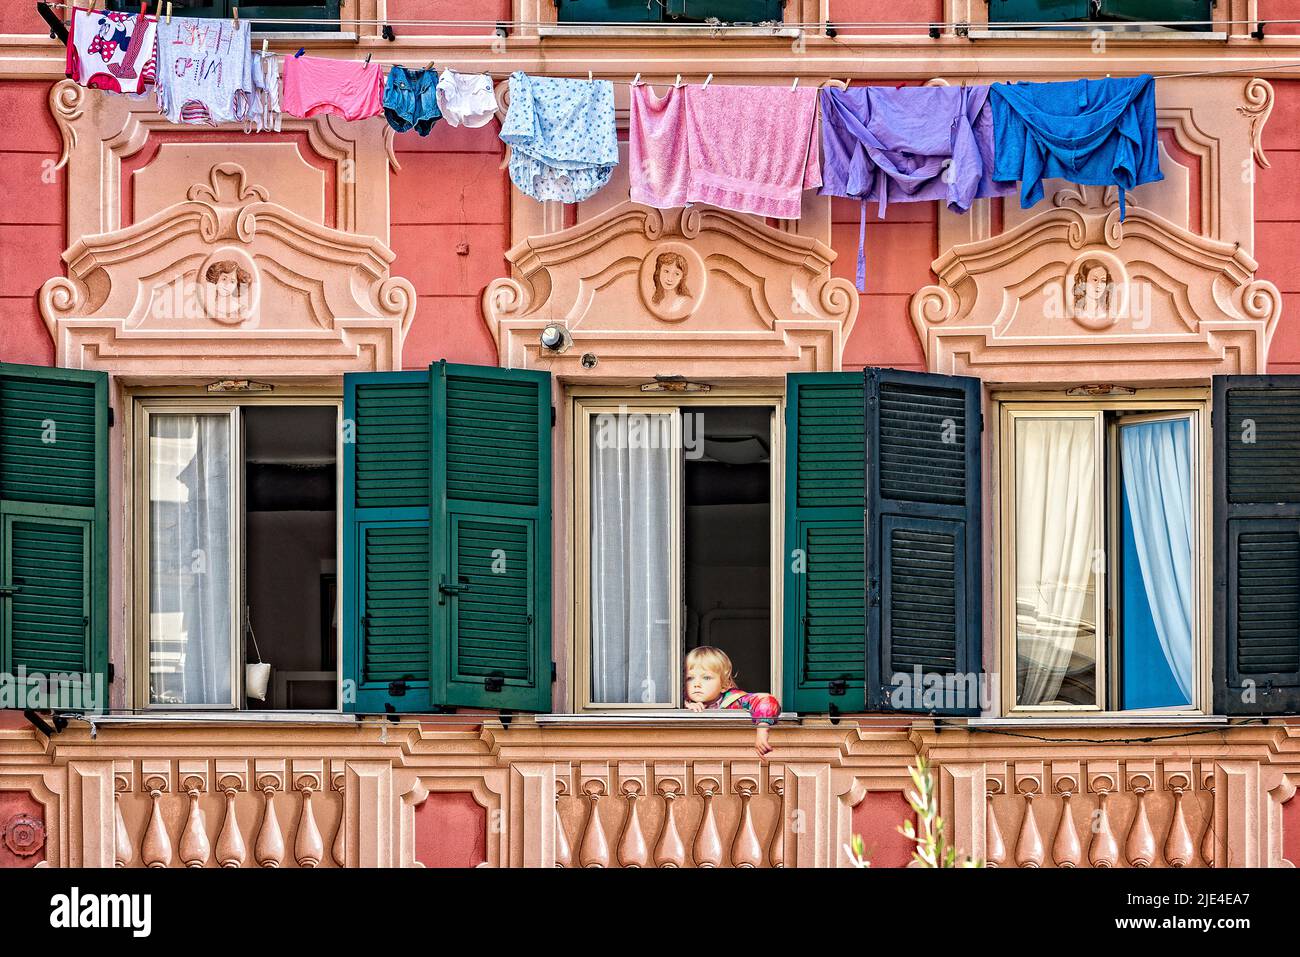 Italien Ligurien Tigullio Santa margherita Ligure - alte Stadt Trompe L'oeil mit Kind Stockfoto